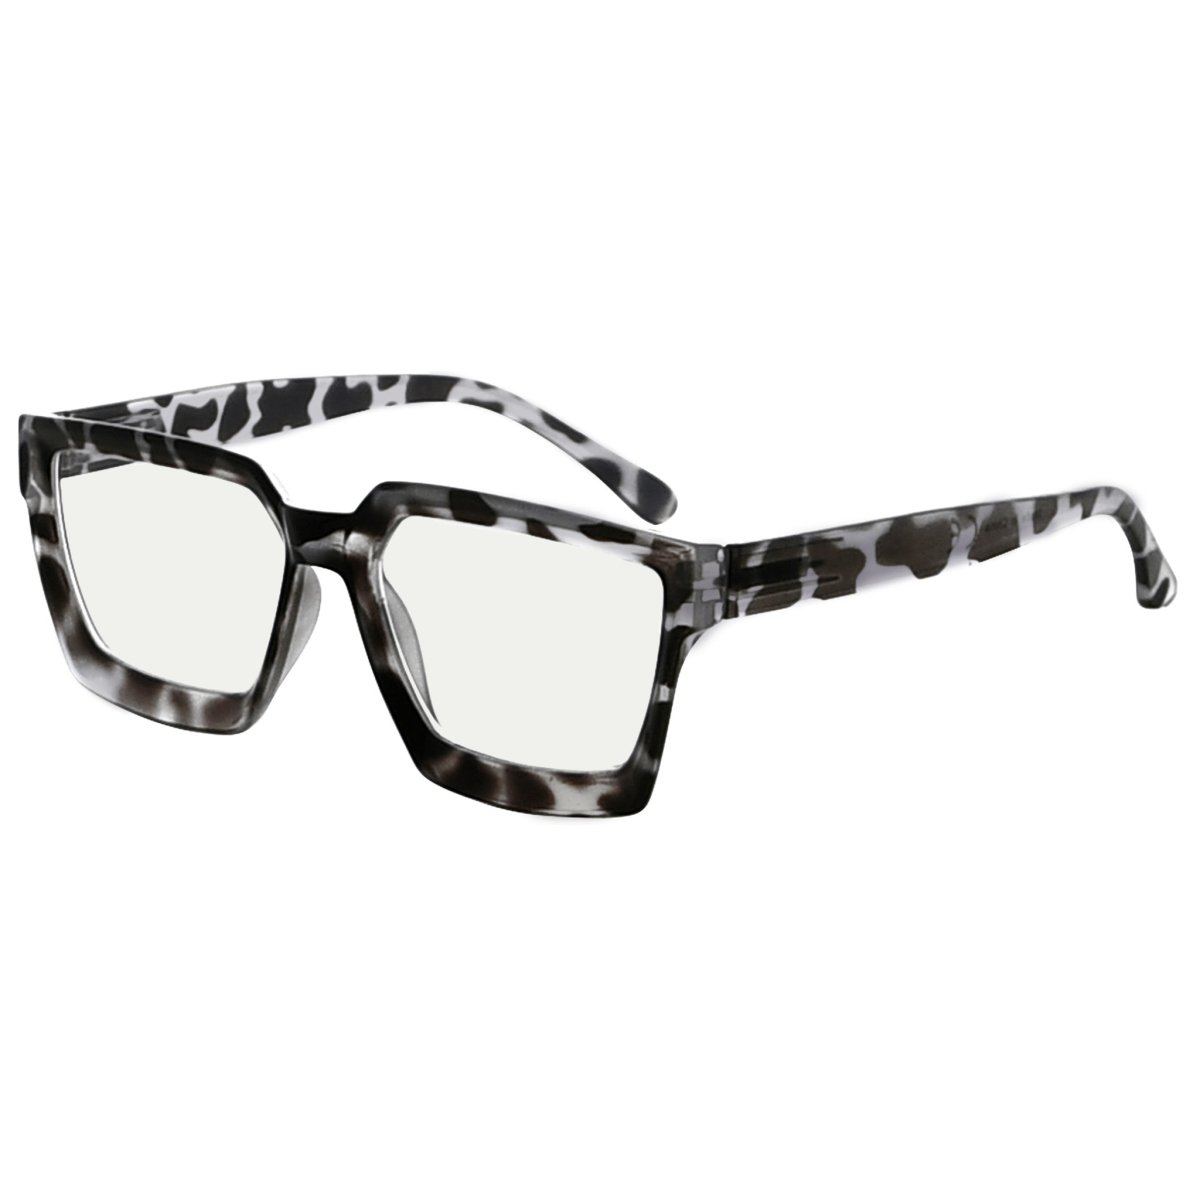 Progressive Reading Glasses Grey Tortoise M2003